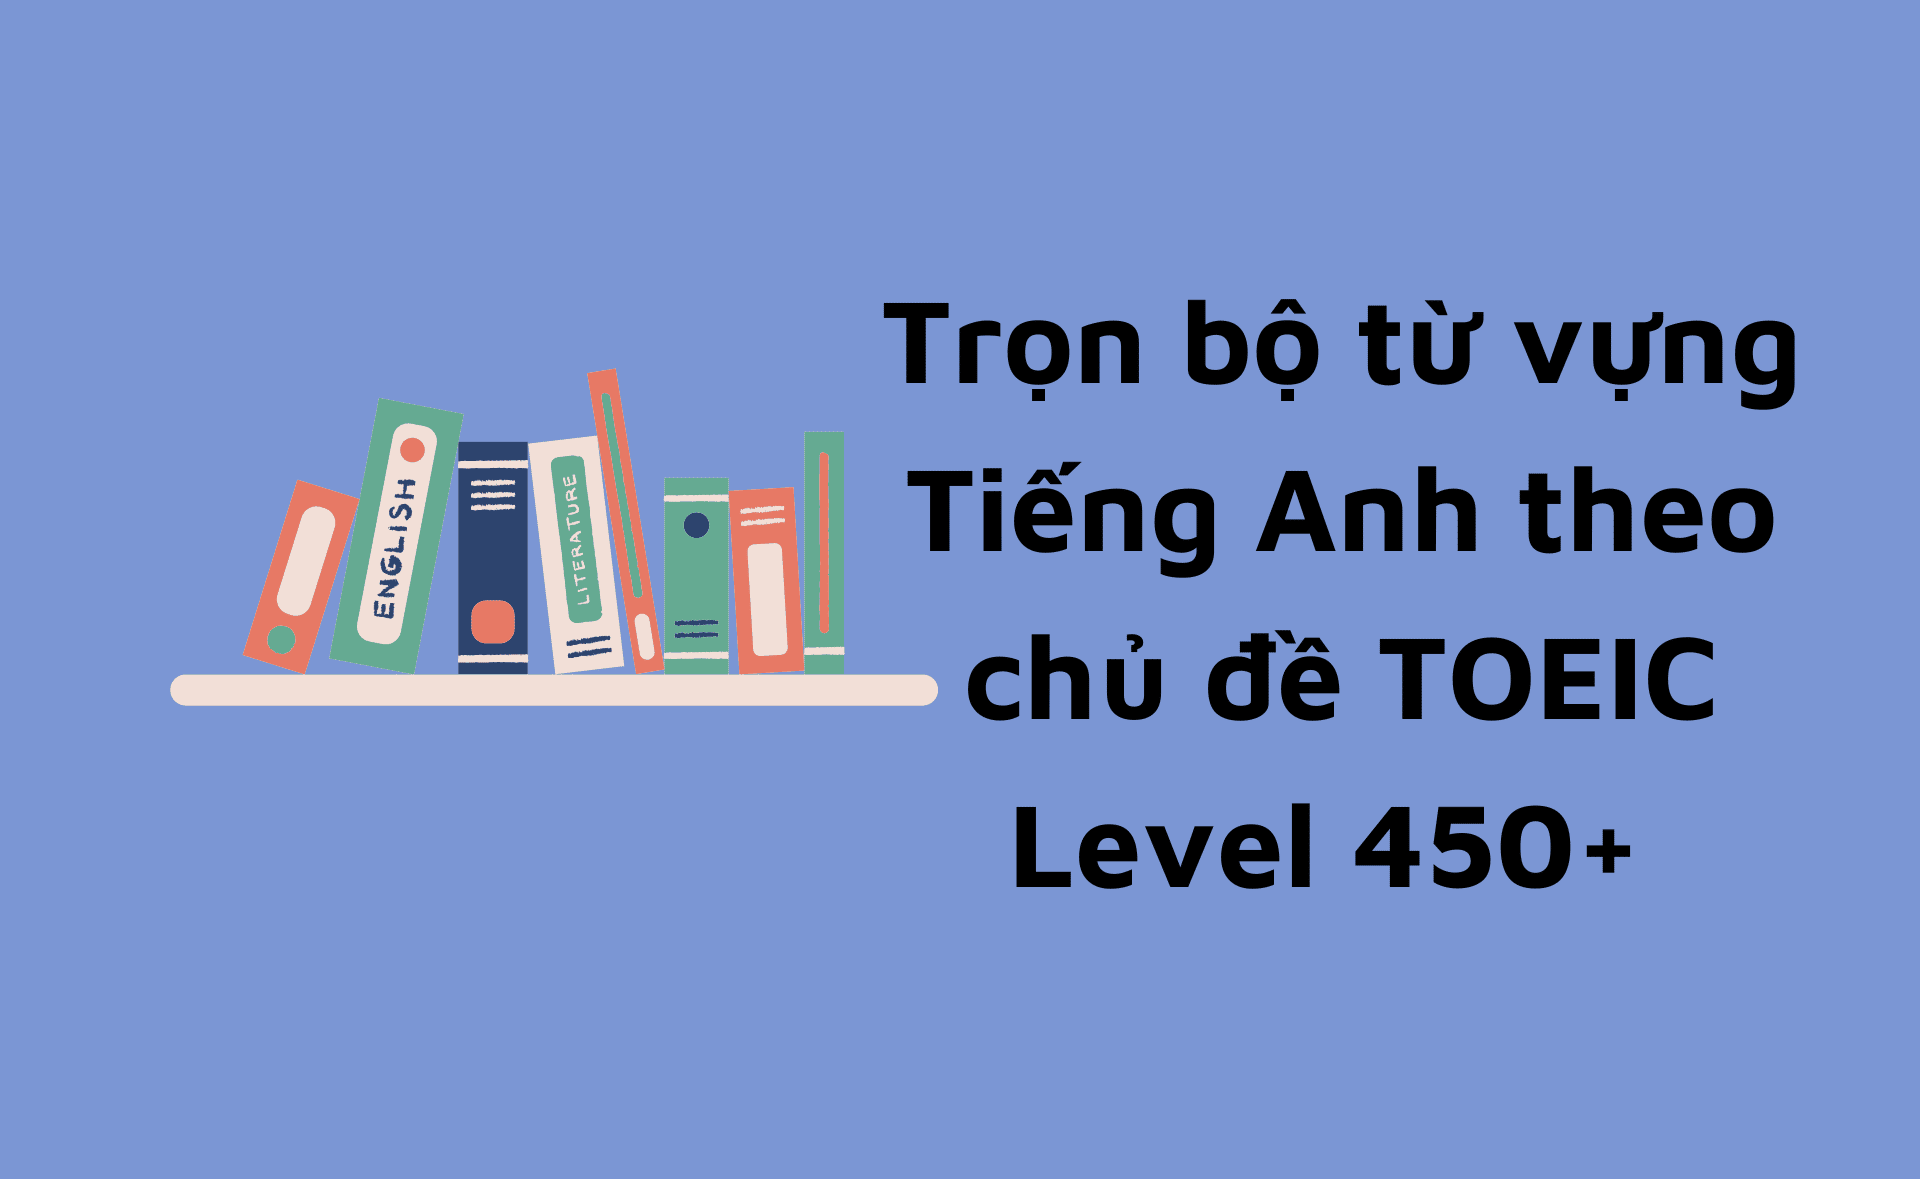 TOEIC Level 450+